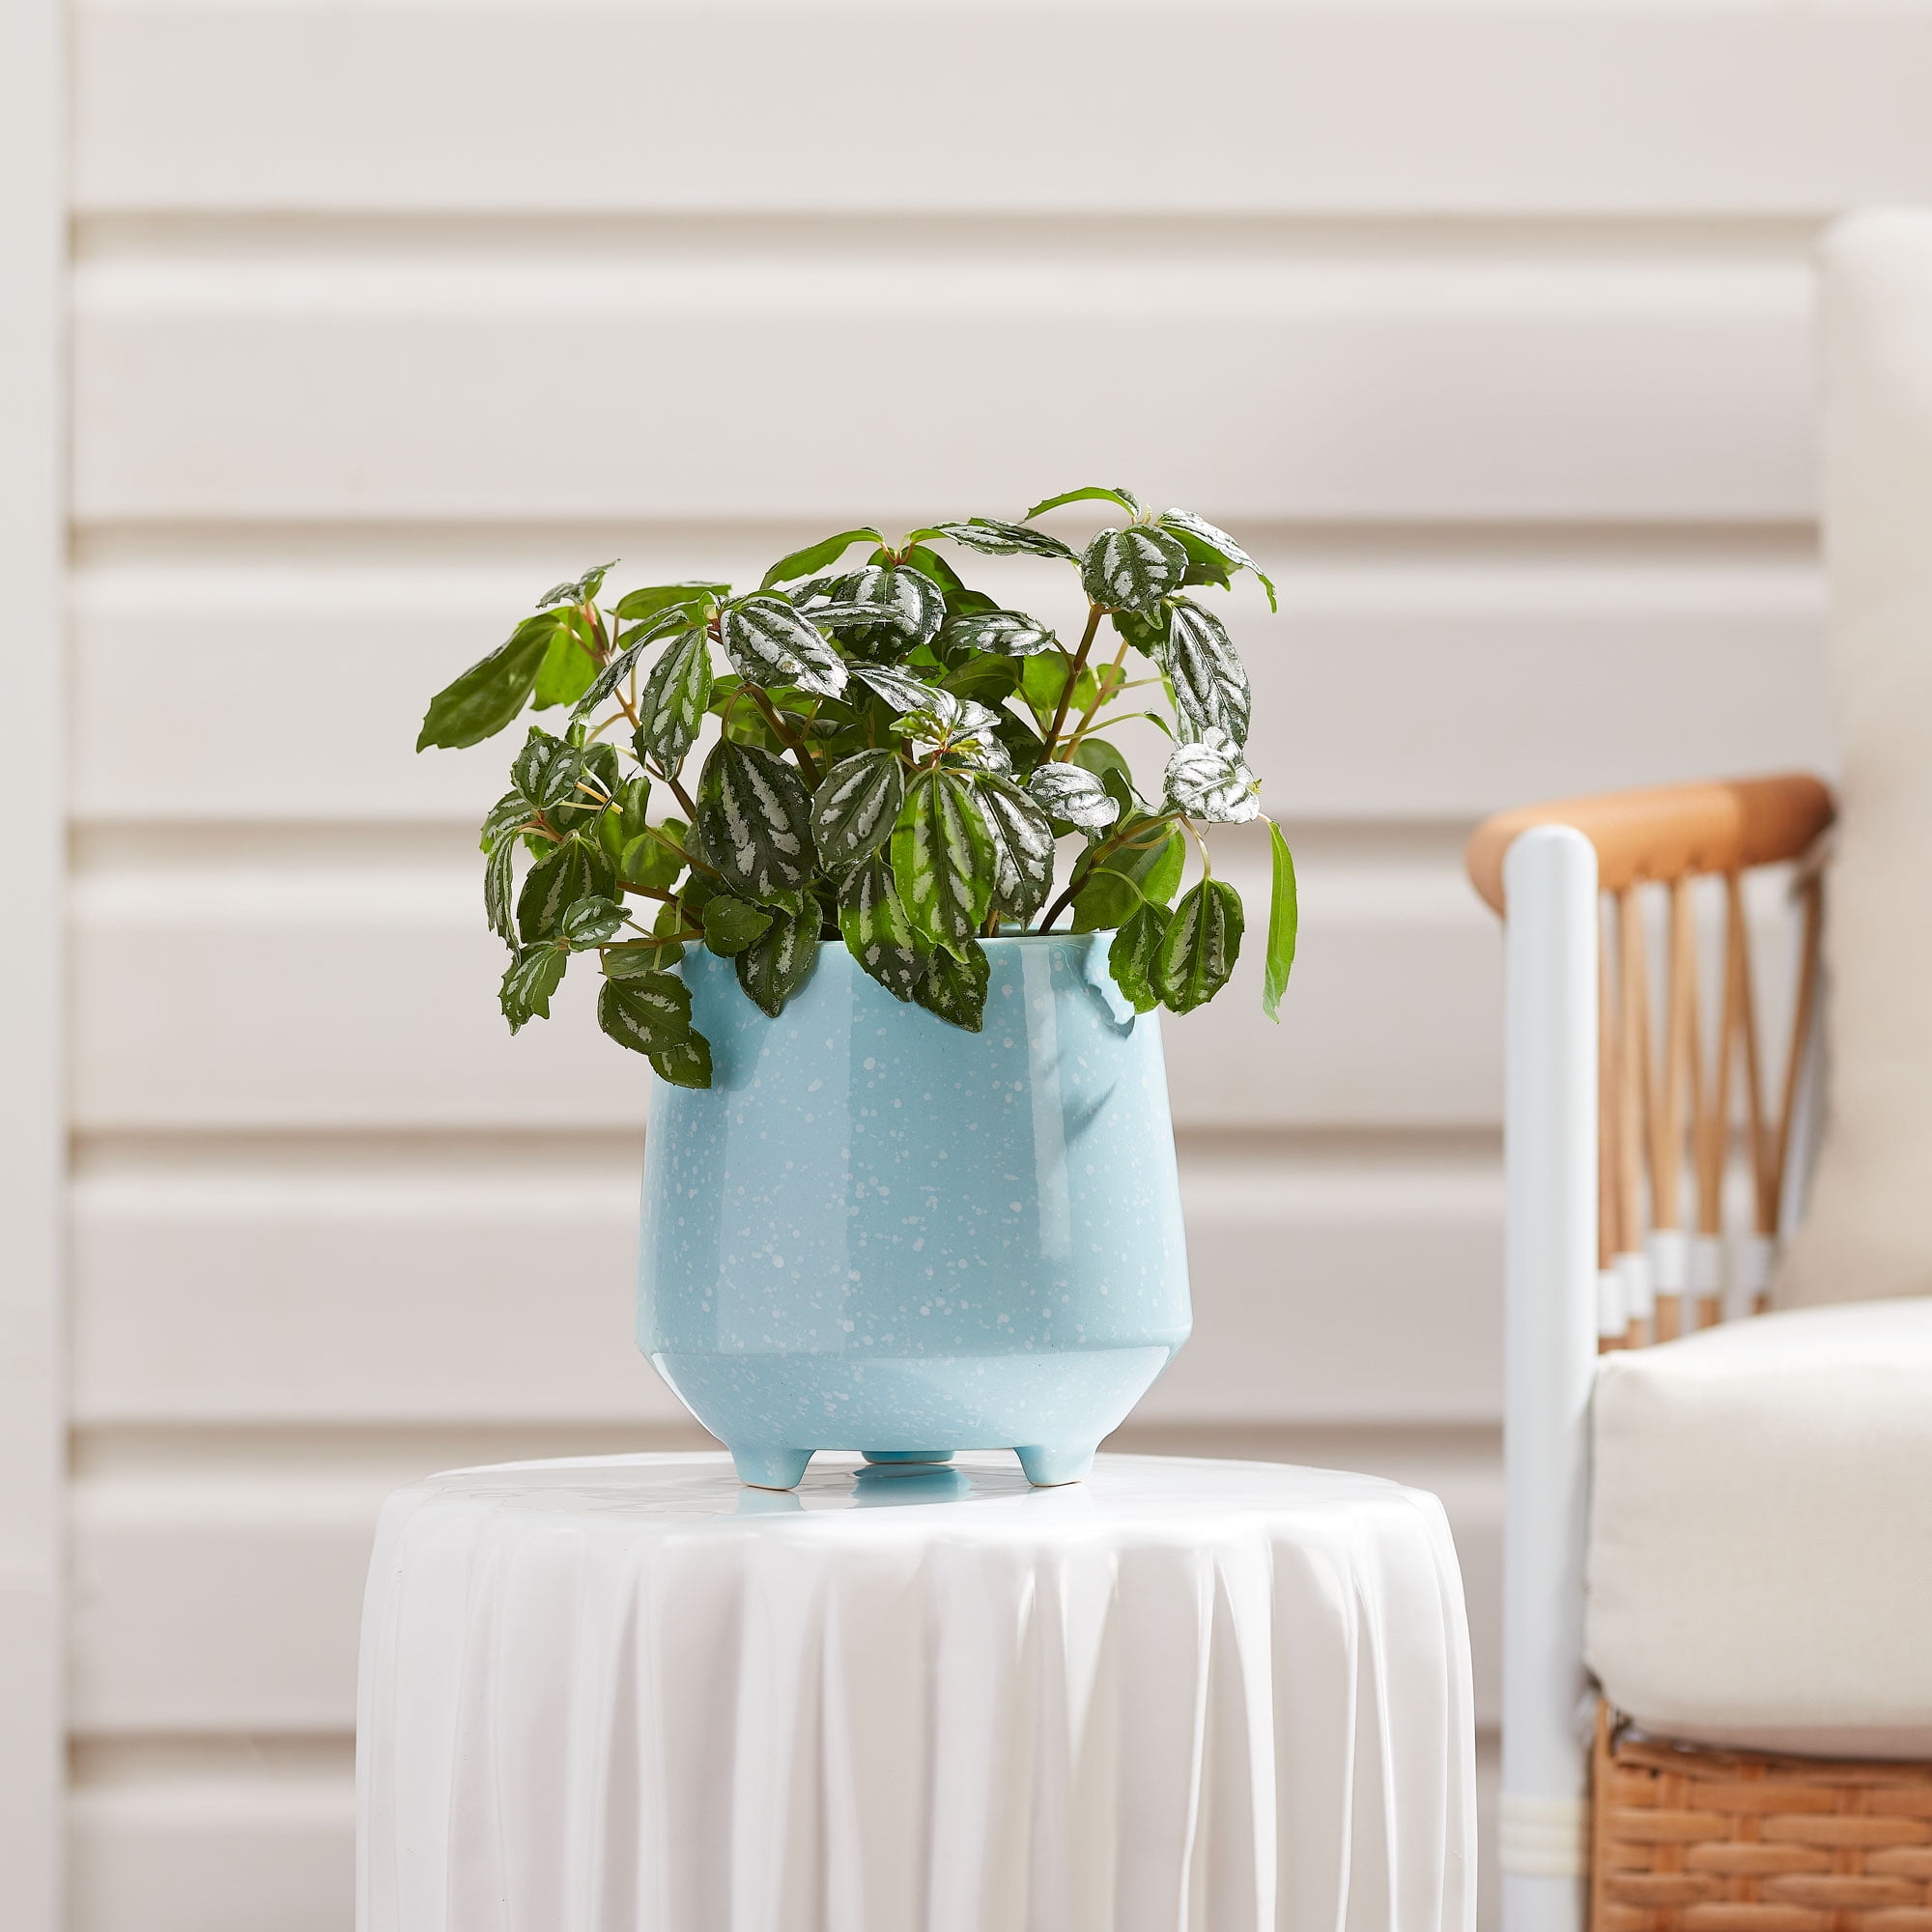  Niyara Designer Ceramic planters pots for Indoor Outdoor Home,  Garden Office Decor Balcony Planters Gamla Flower Size- Large (8 inches)  (Blue Handi) : פאטיו, מדשאה וגינה